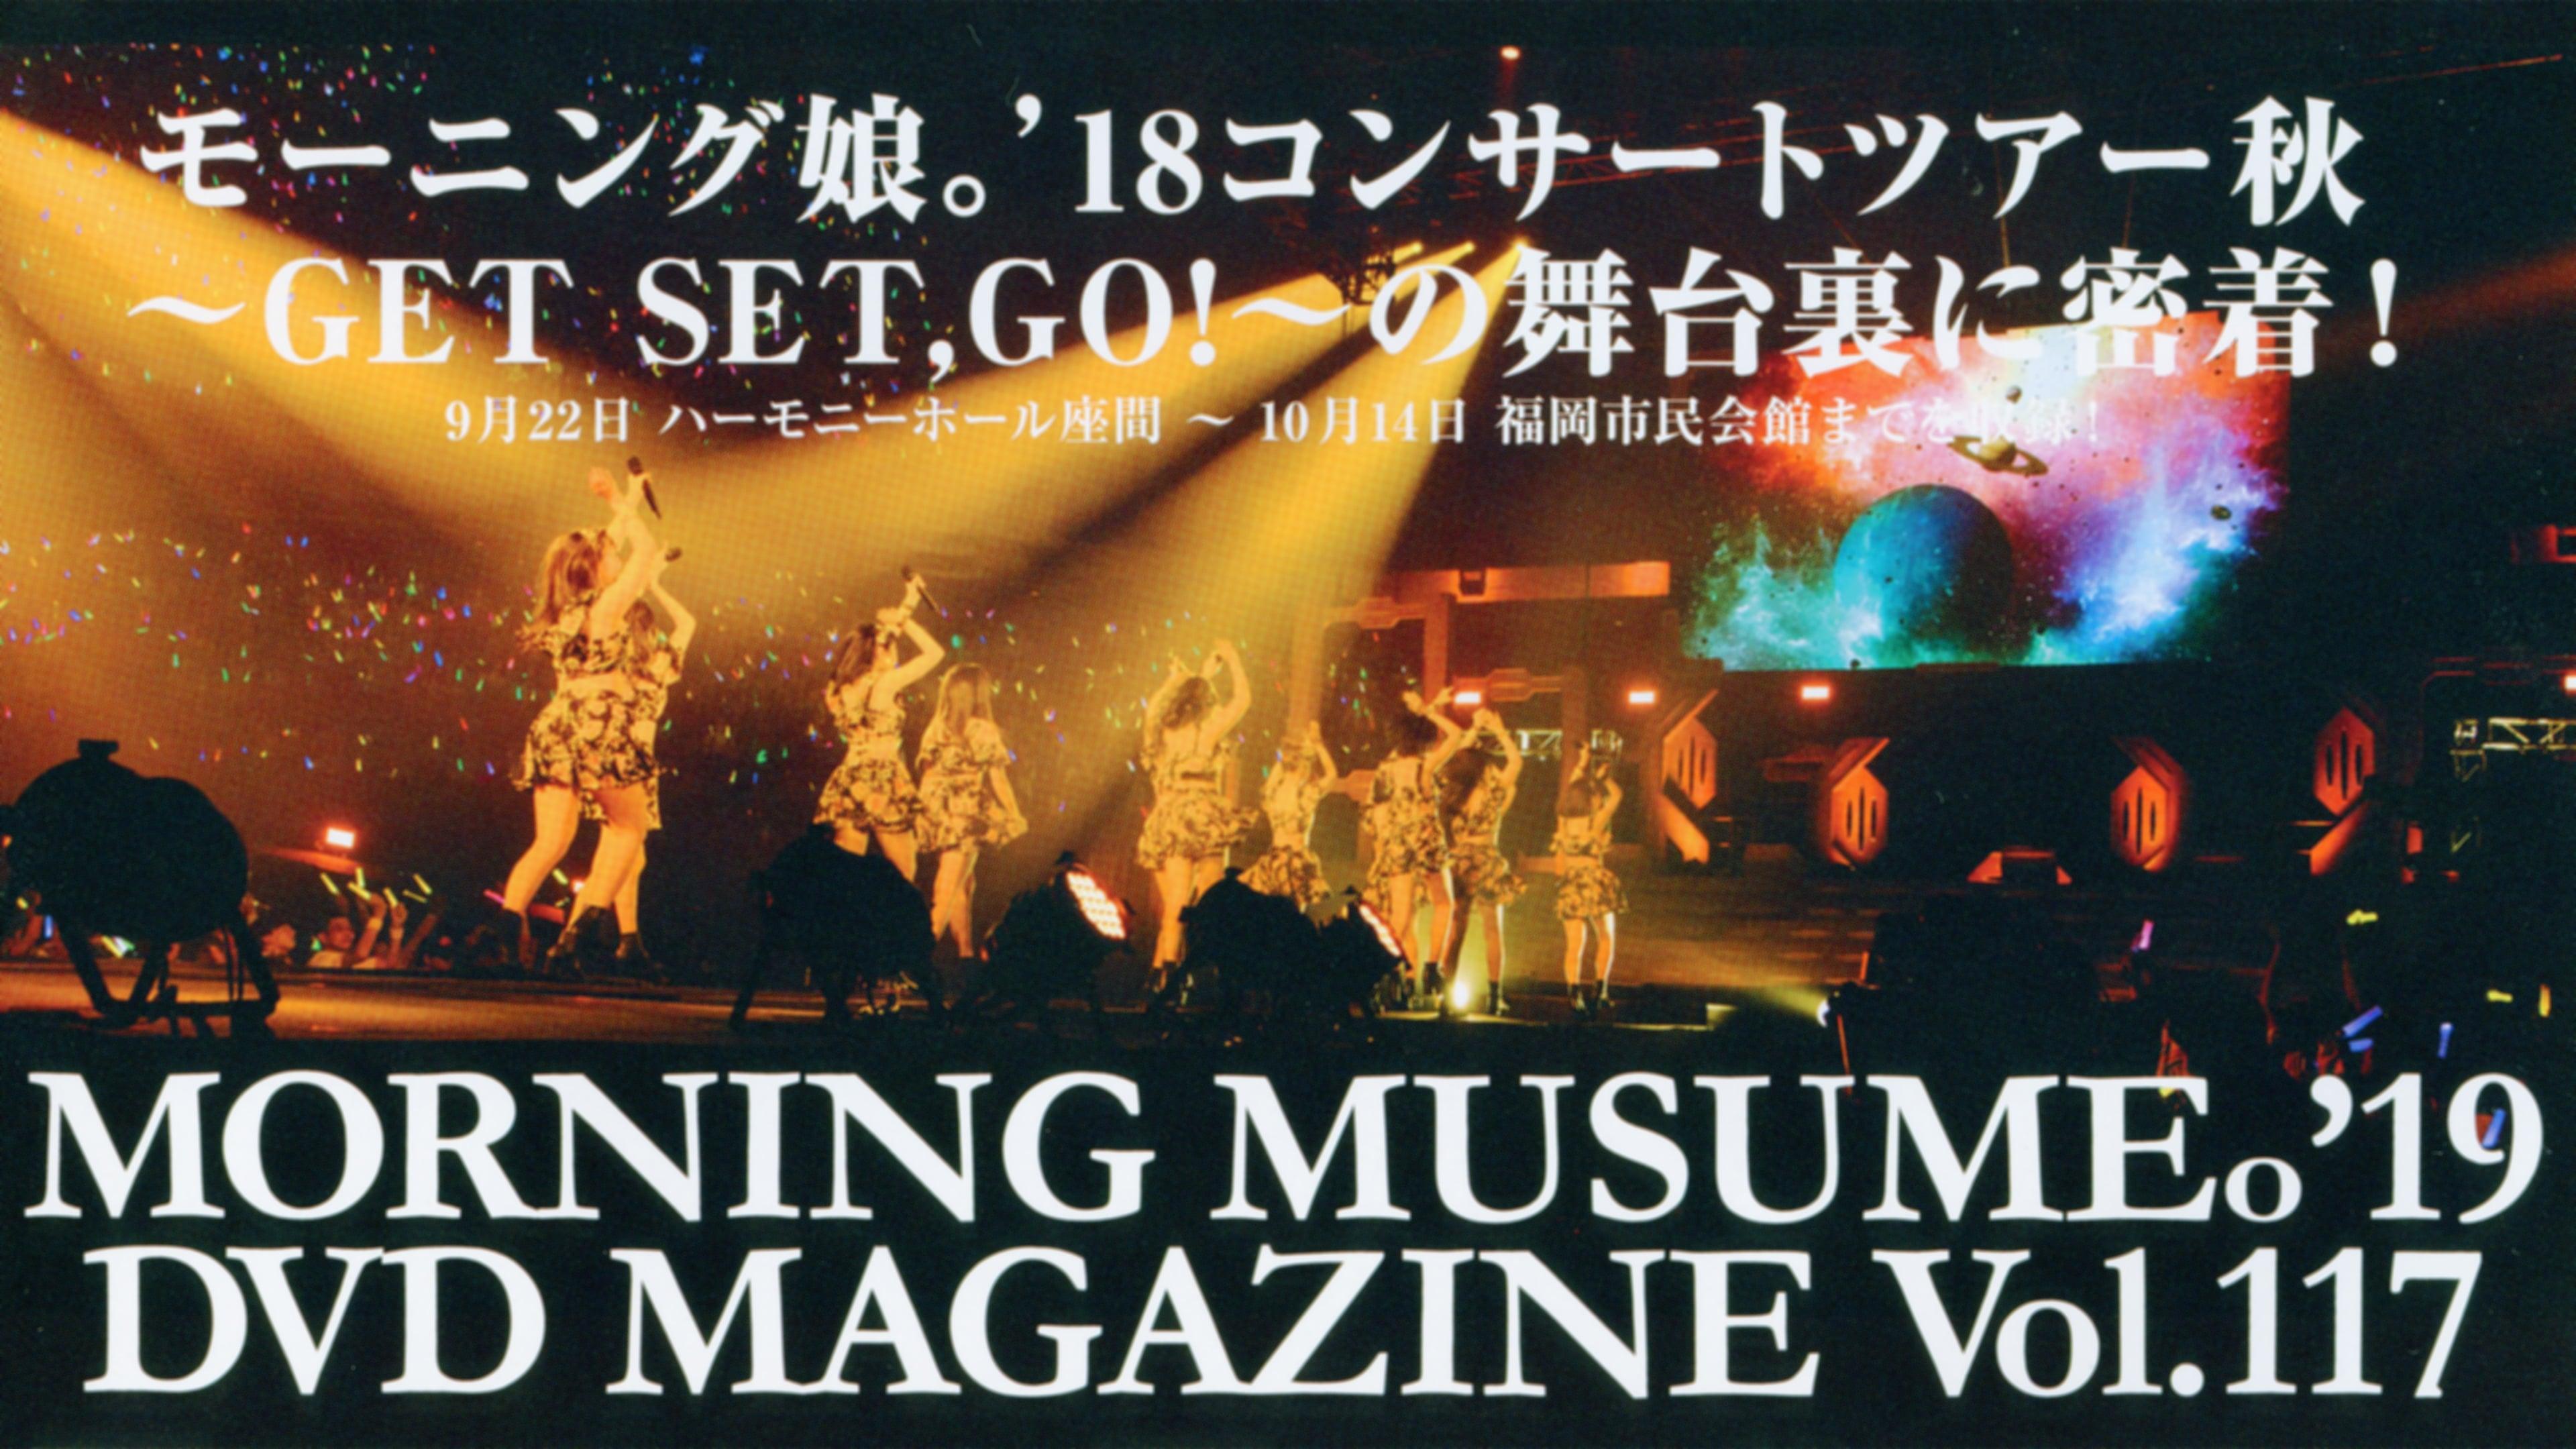 Morning Musume.'19 DVD Magazine Vol.117 backdrop